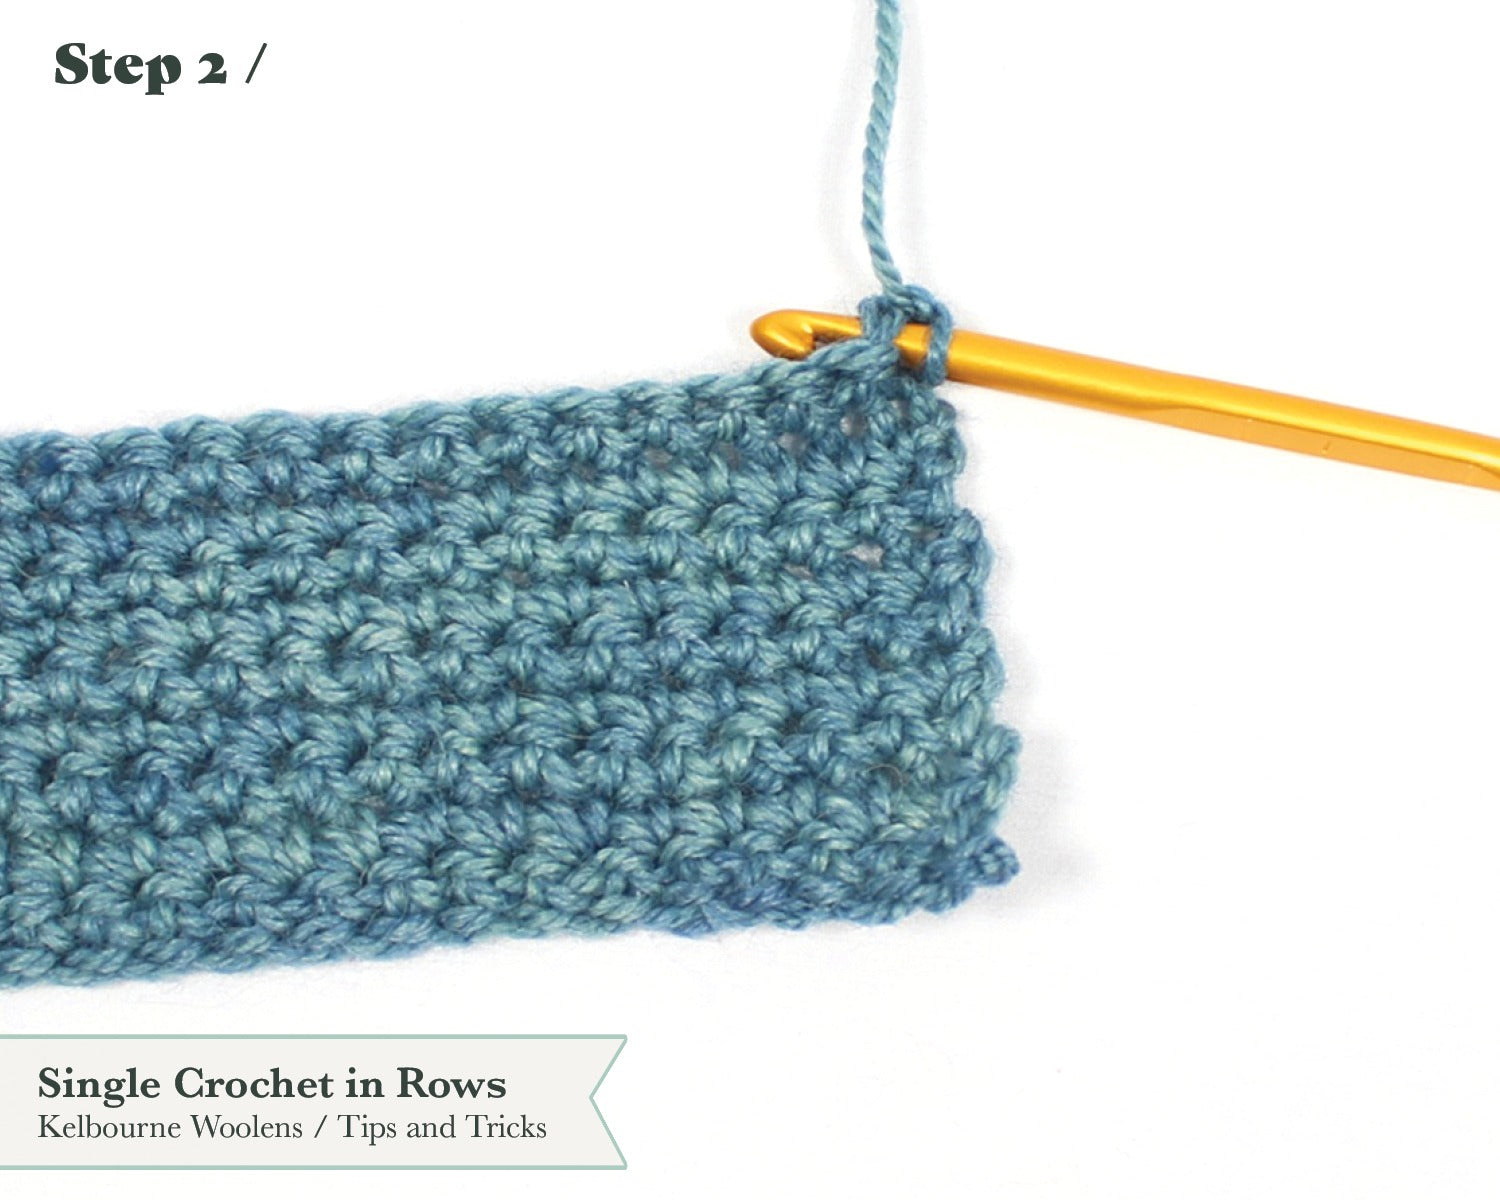 Counting Crochet Hook Set Digital, Crochet Kit with Palestine